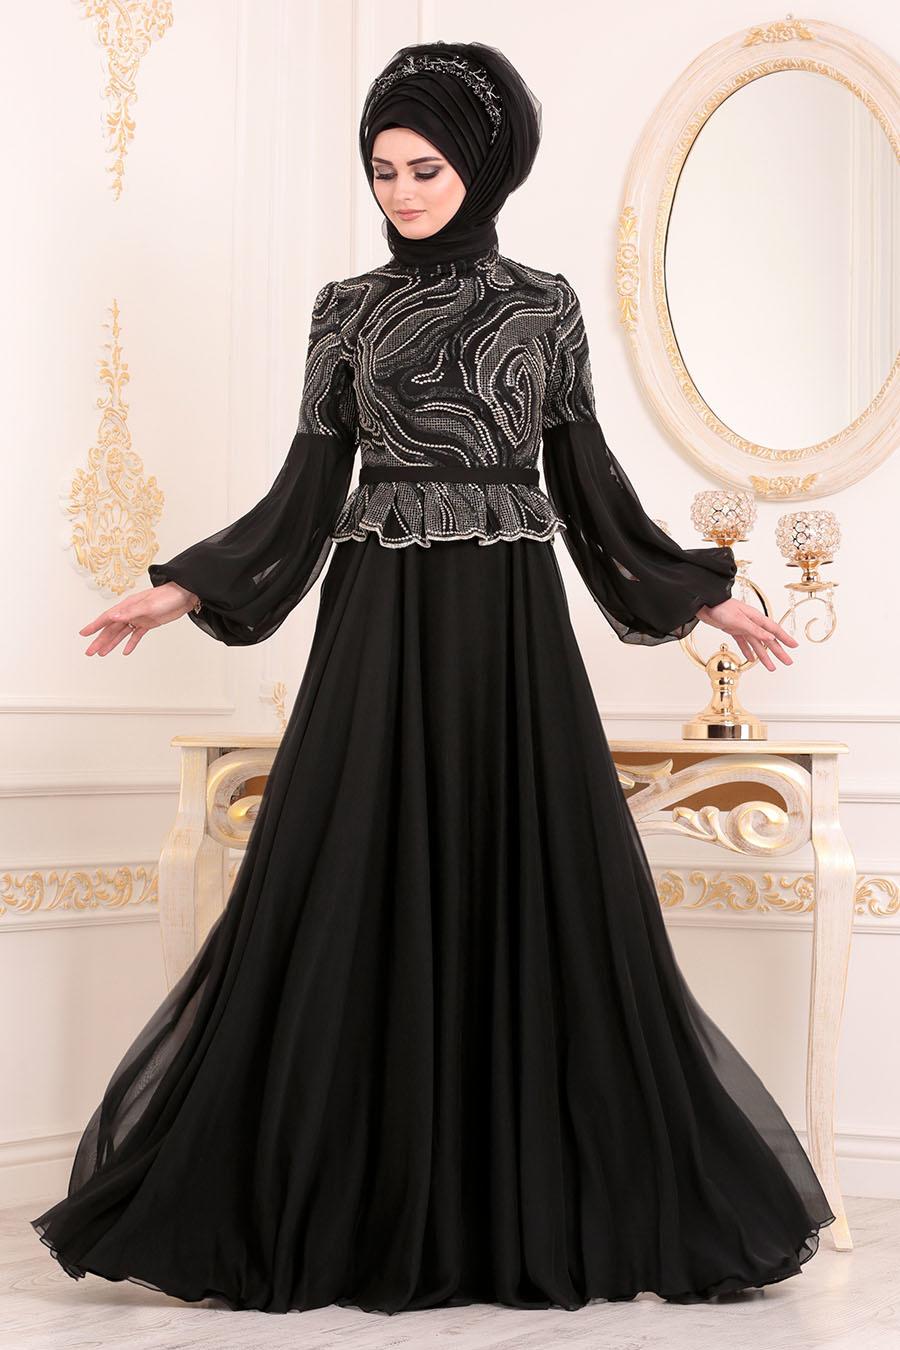 Tesetturlu Abiye Elbise Tesetturlu Abiye Elbise Balon Kollu Gri Tesettur Abiye Elbise 38 Muslimah Fashion Outfits Muslim Fashion Dress Long Dress Fashion